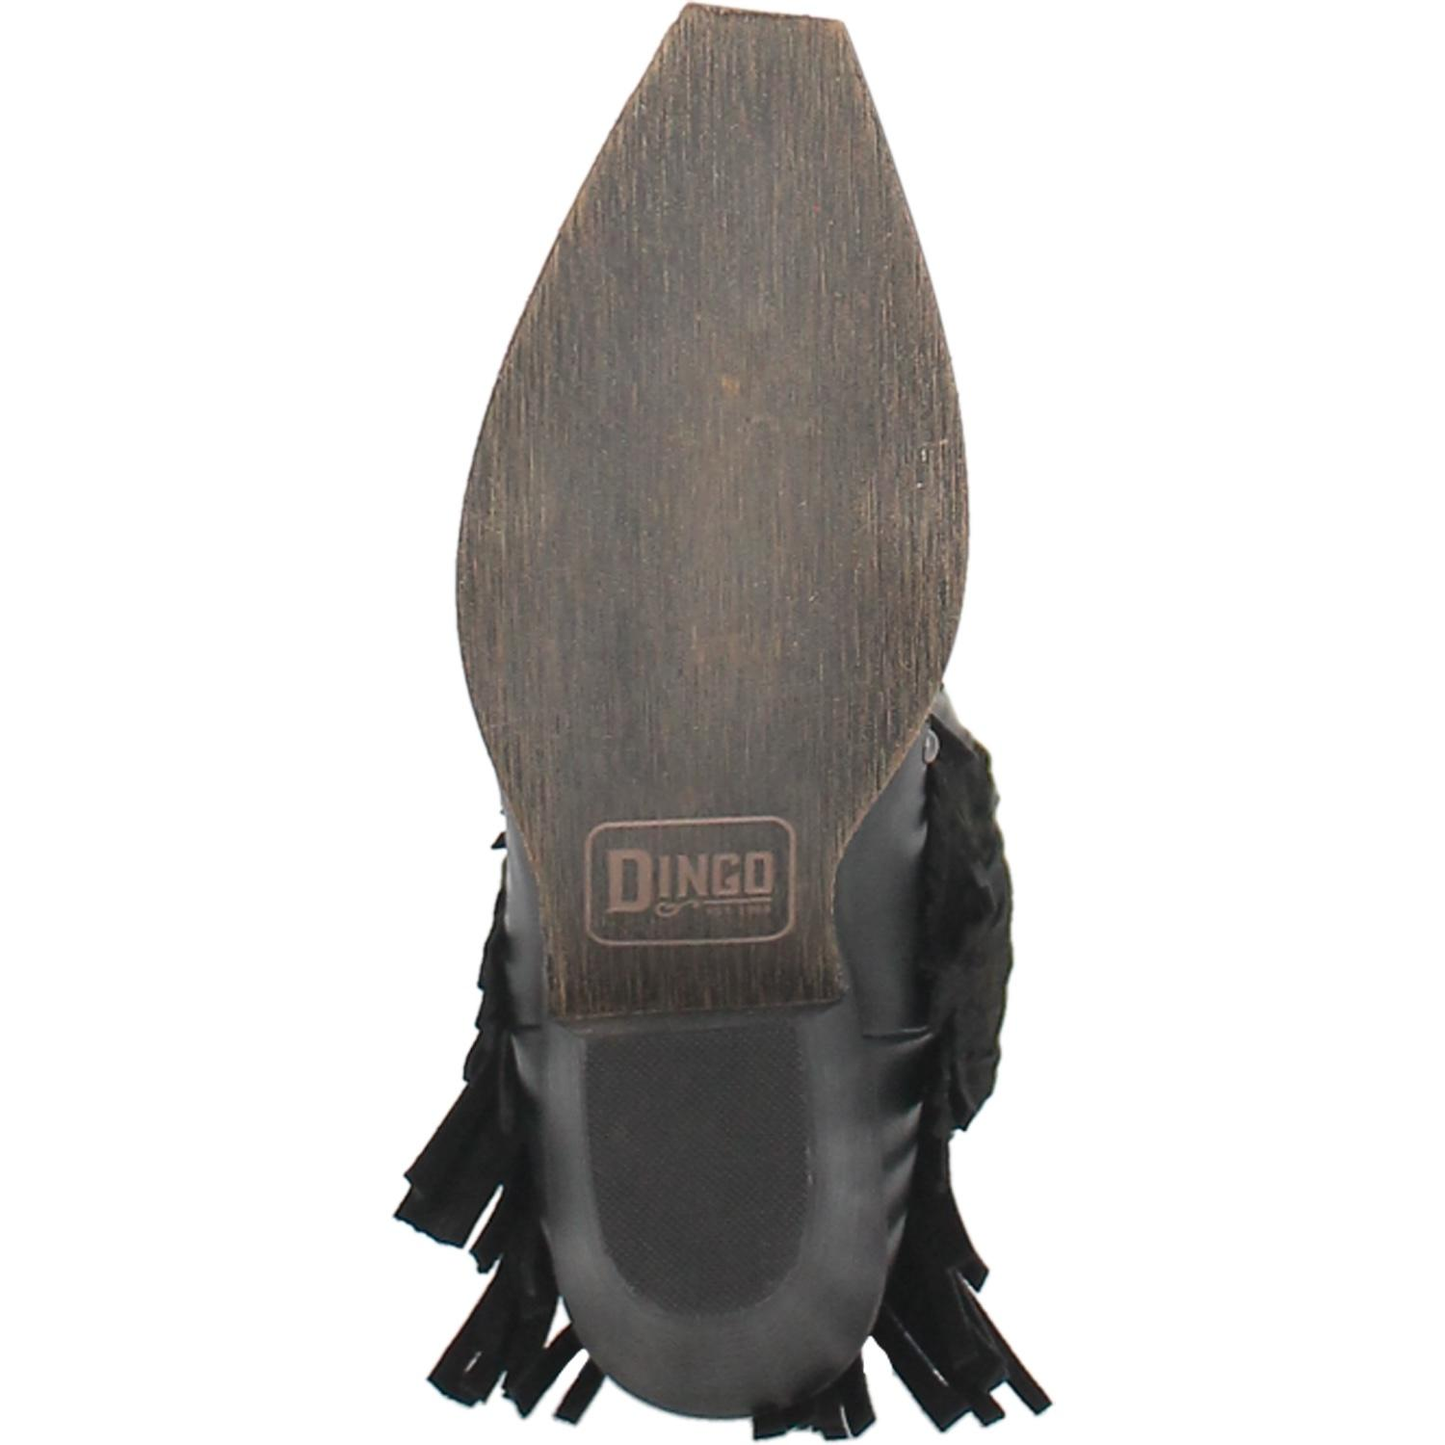 Dingo® Ladies Black Gypsy Fringe Boot DI737-BK